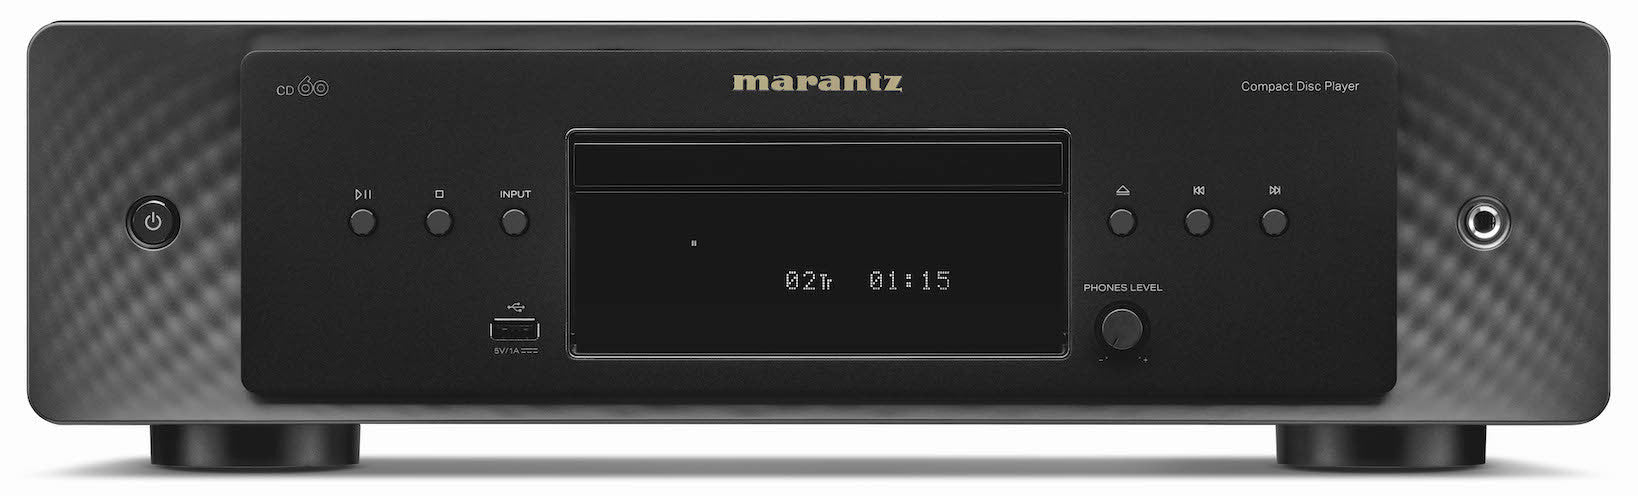 Marantz CD60 CD player